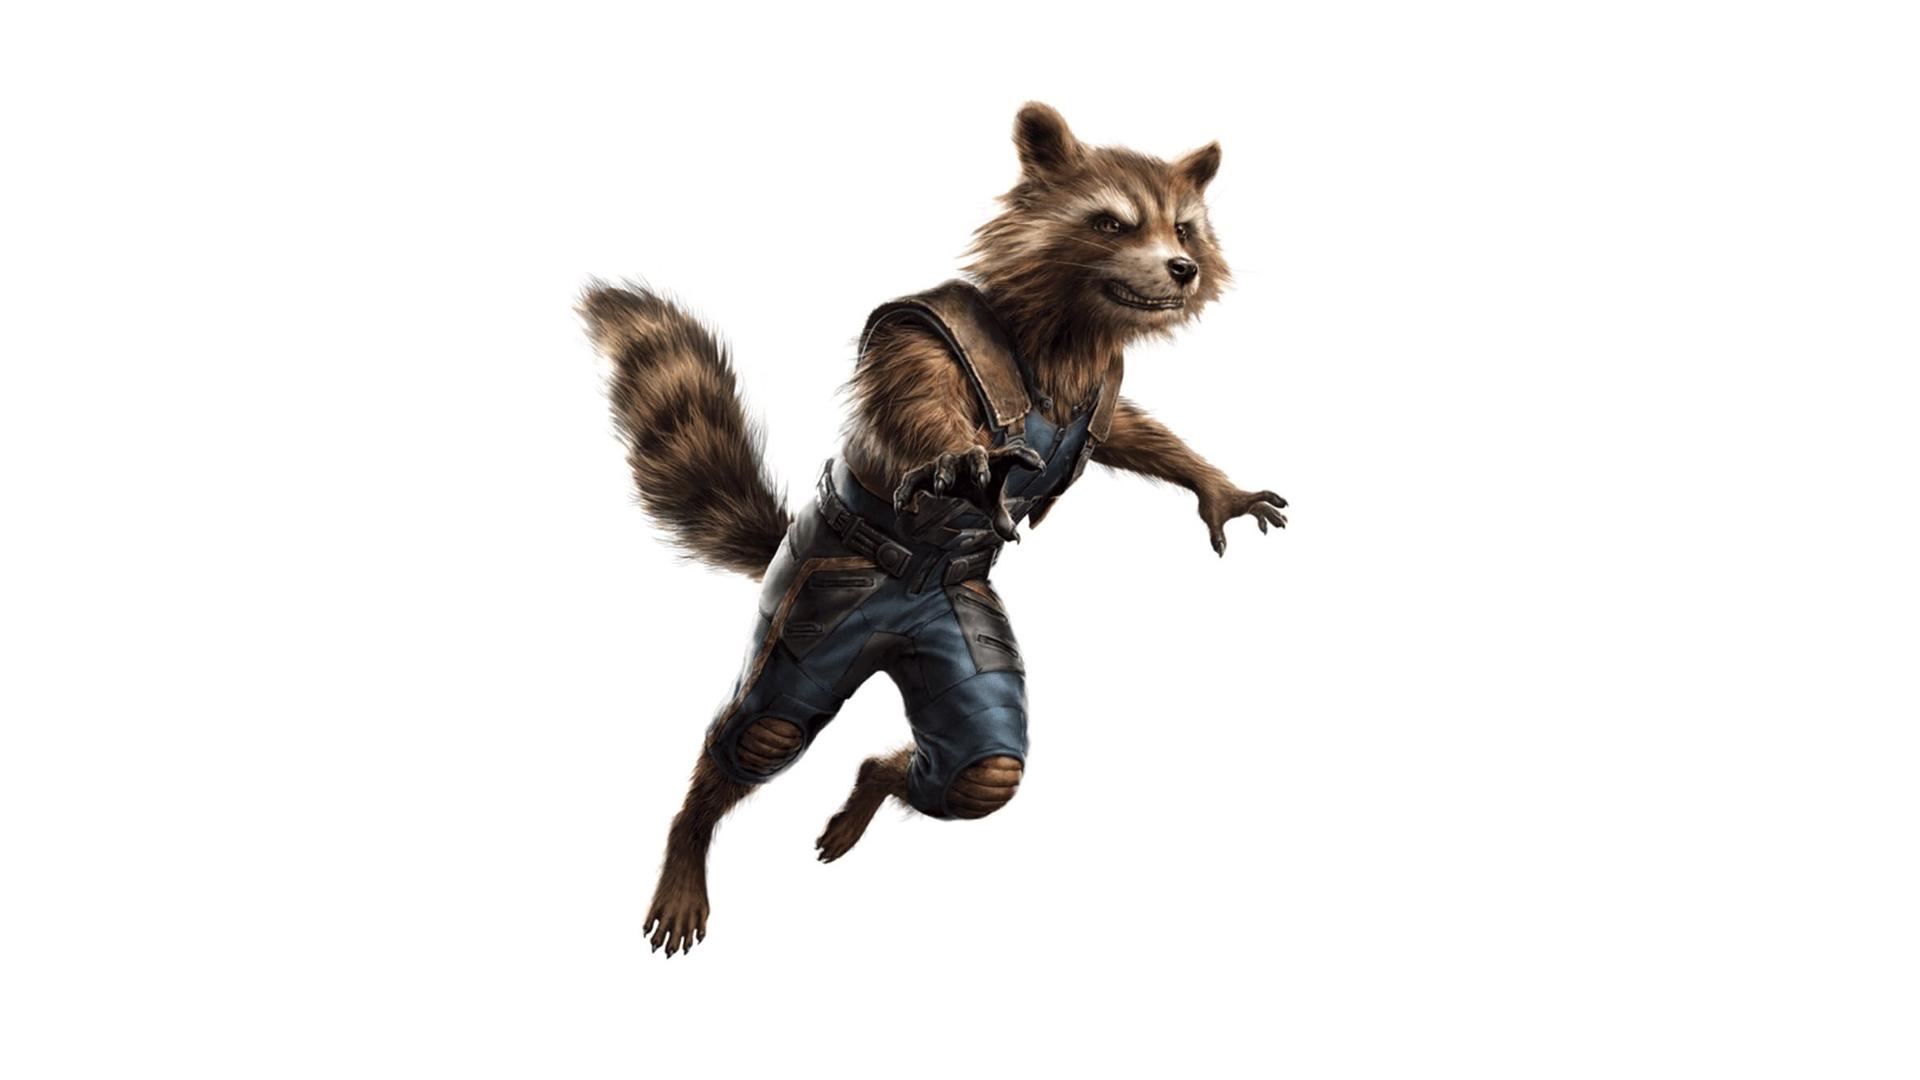 Marvel Avengers 4 Rocket Raccoon, HD Movies, 4k Wallpaper, Image